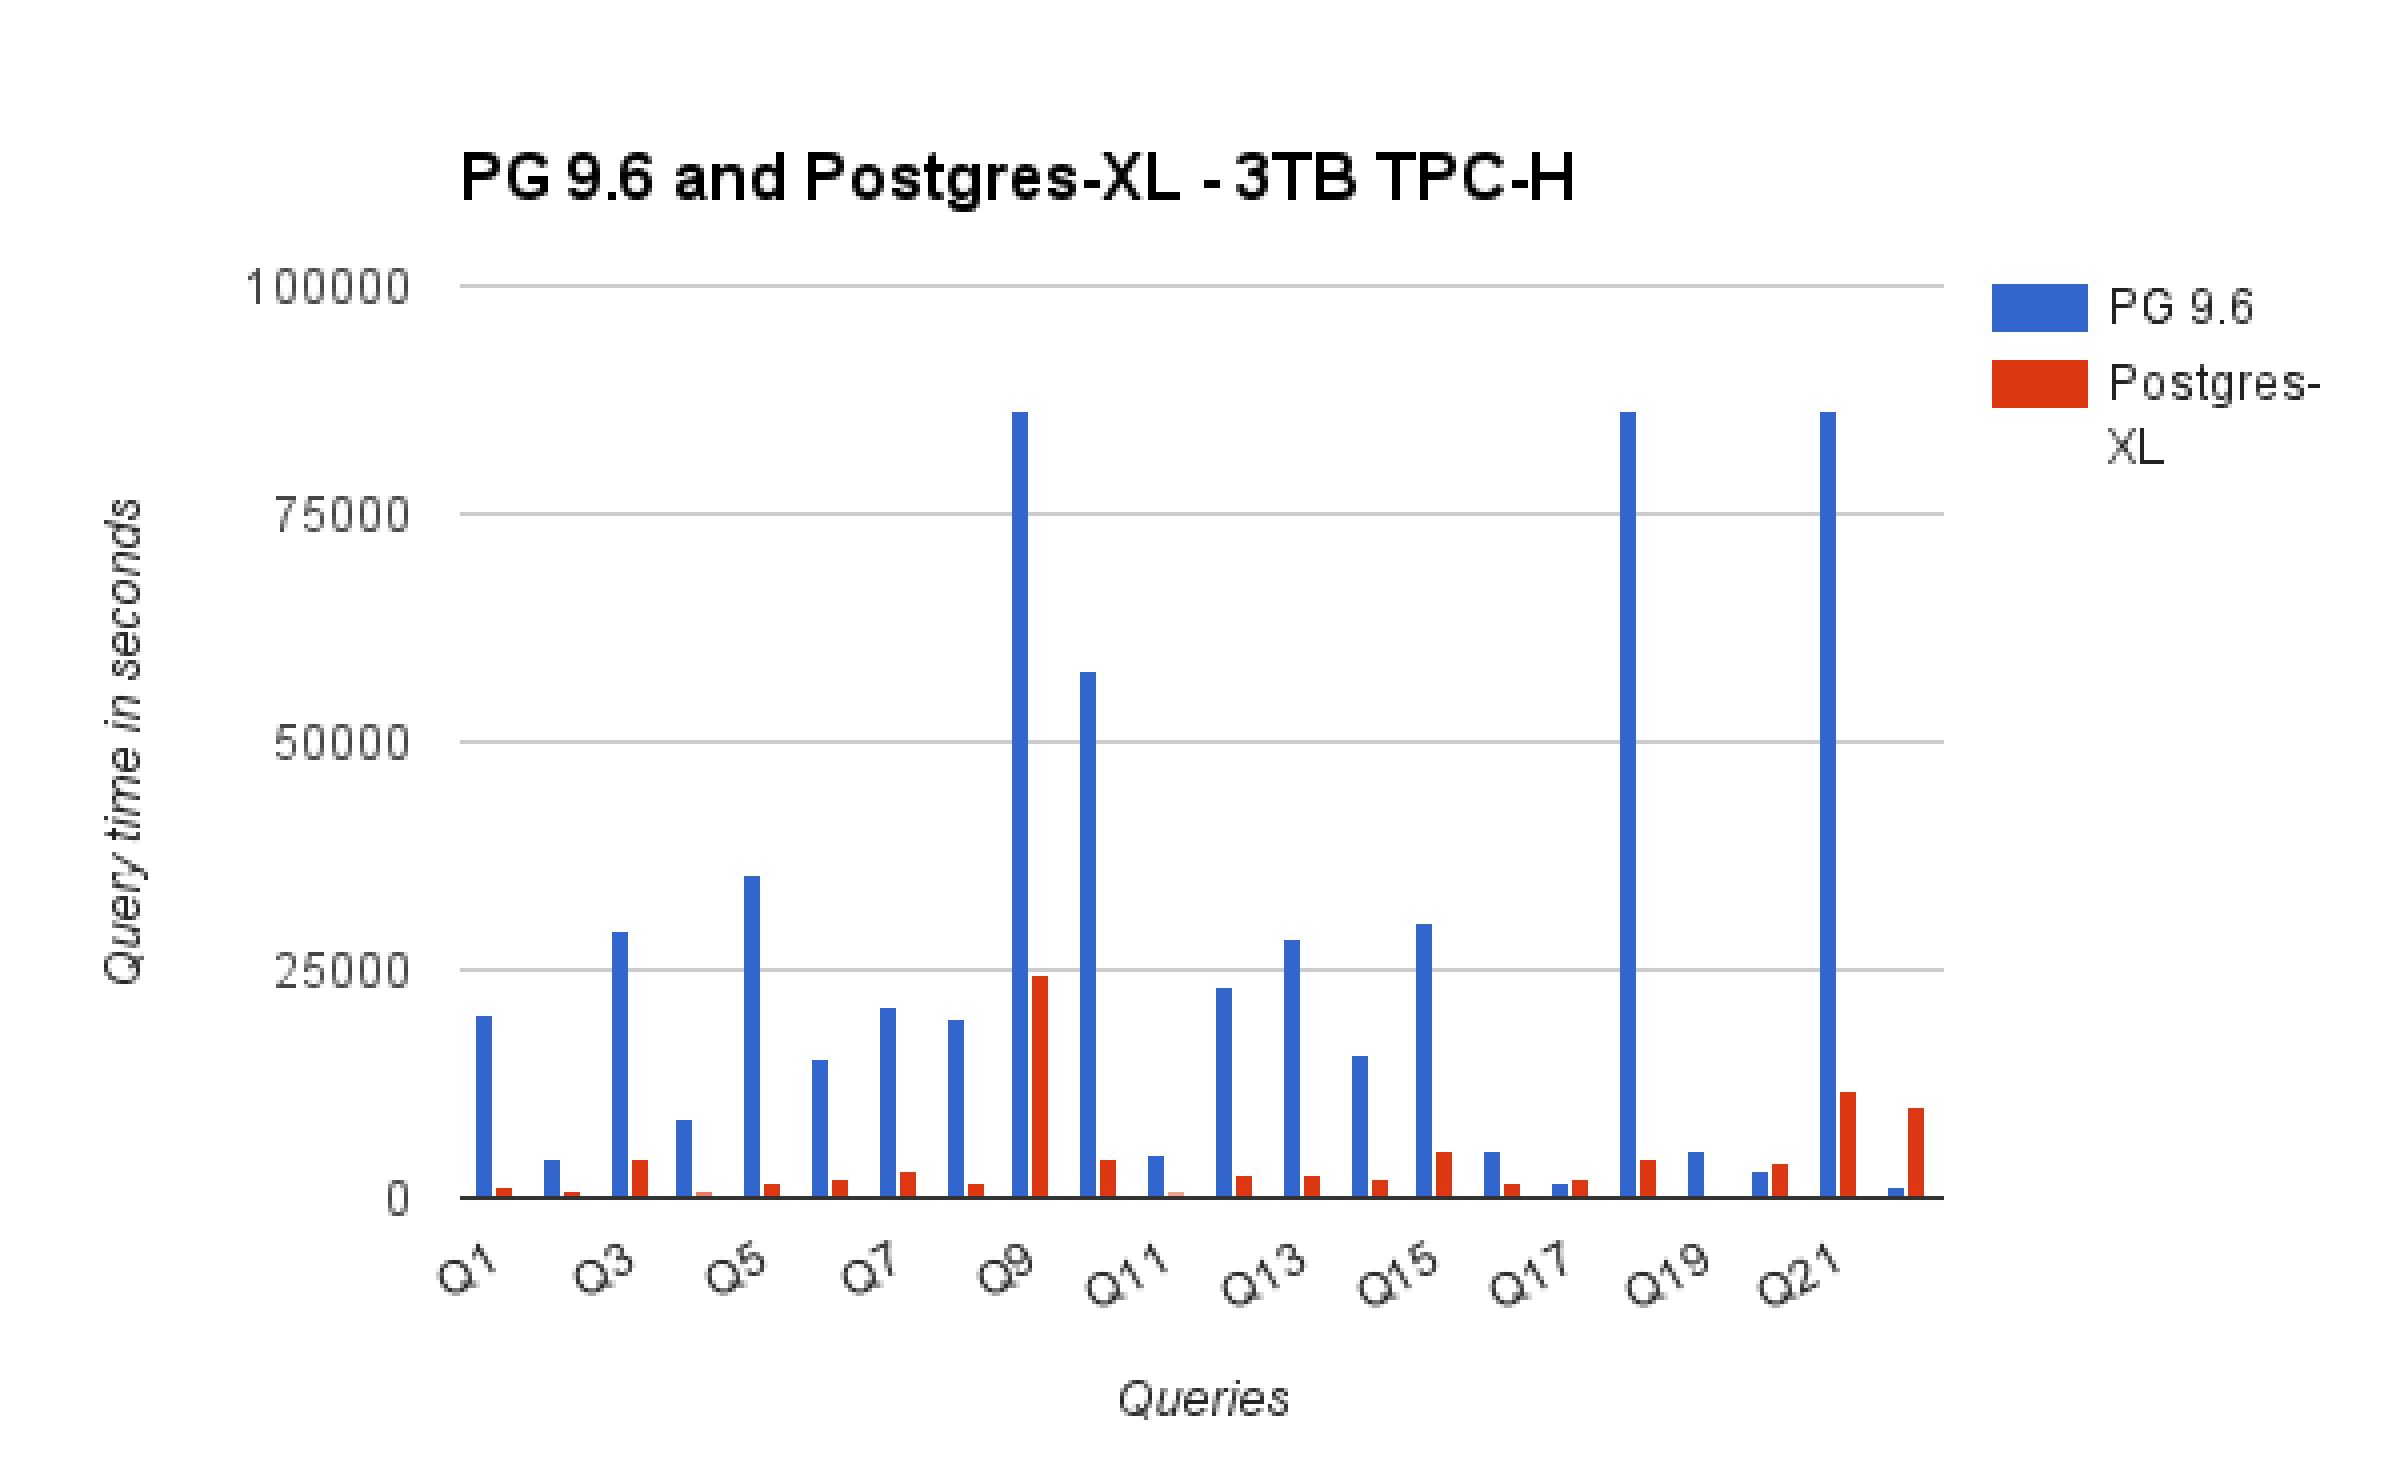 PG 9.6 and Postgres-XL Comparison